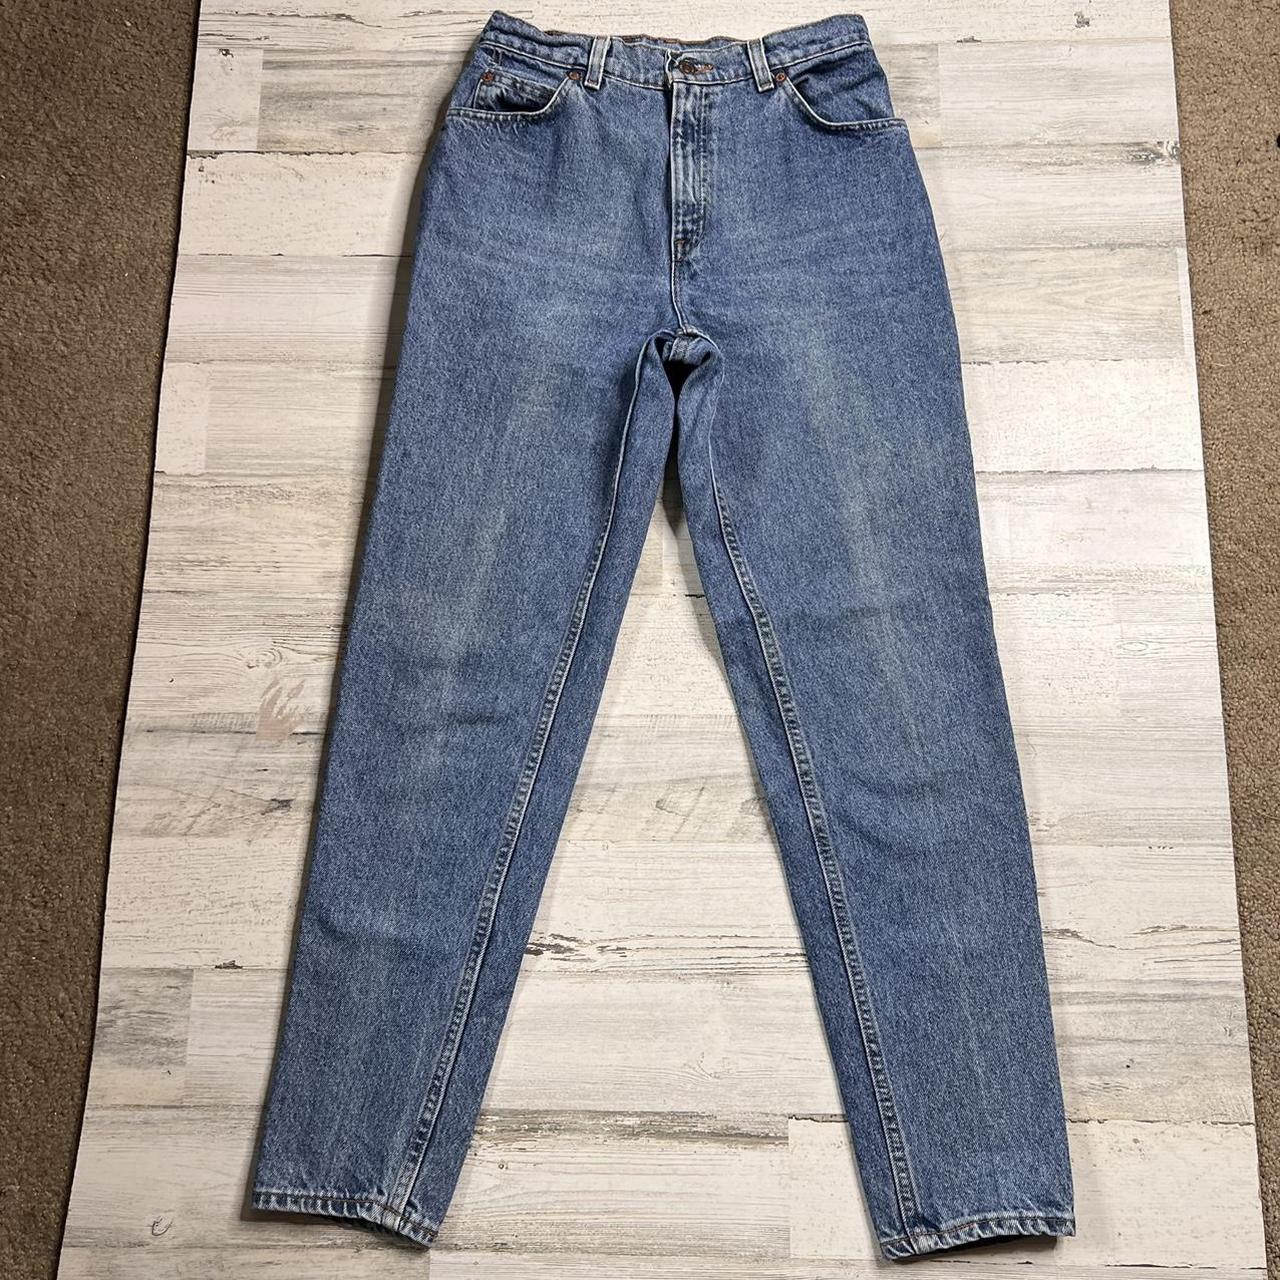 Vintage 1990’s 15951 Levi’s Jeans. Tag reads “8... - Depop